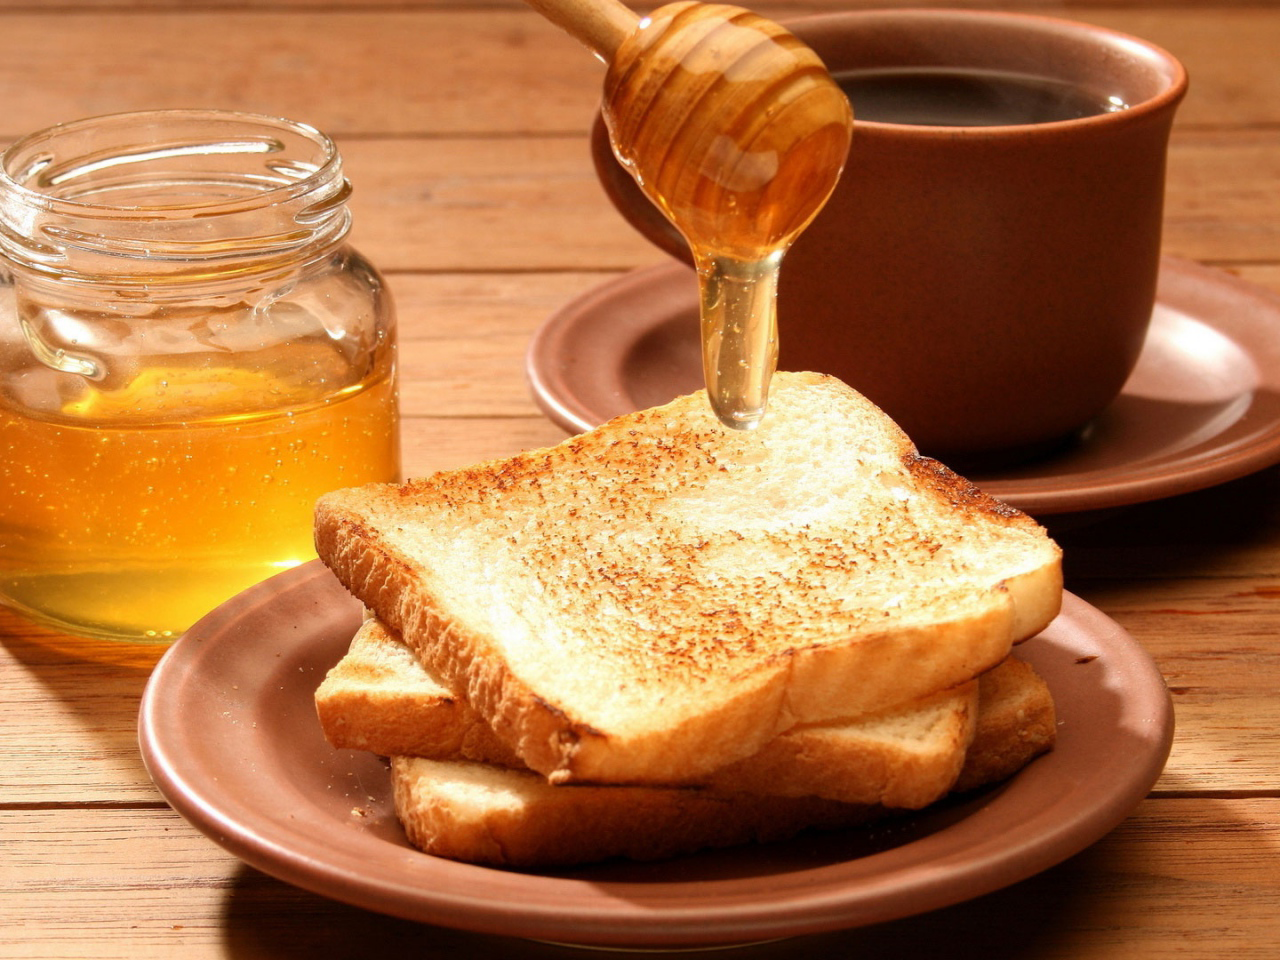 Honey-on-the-toast-bread